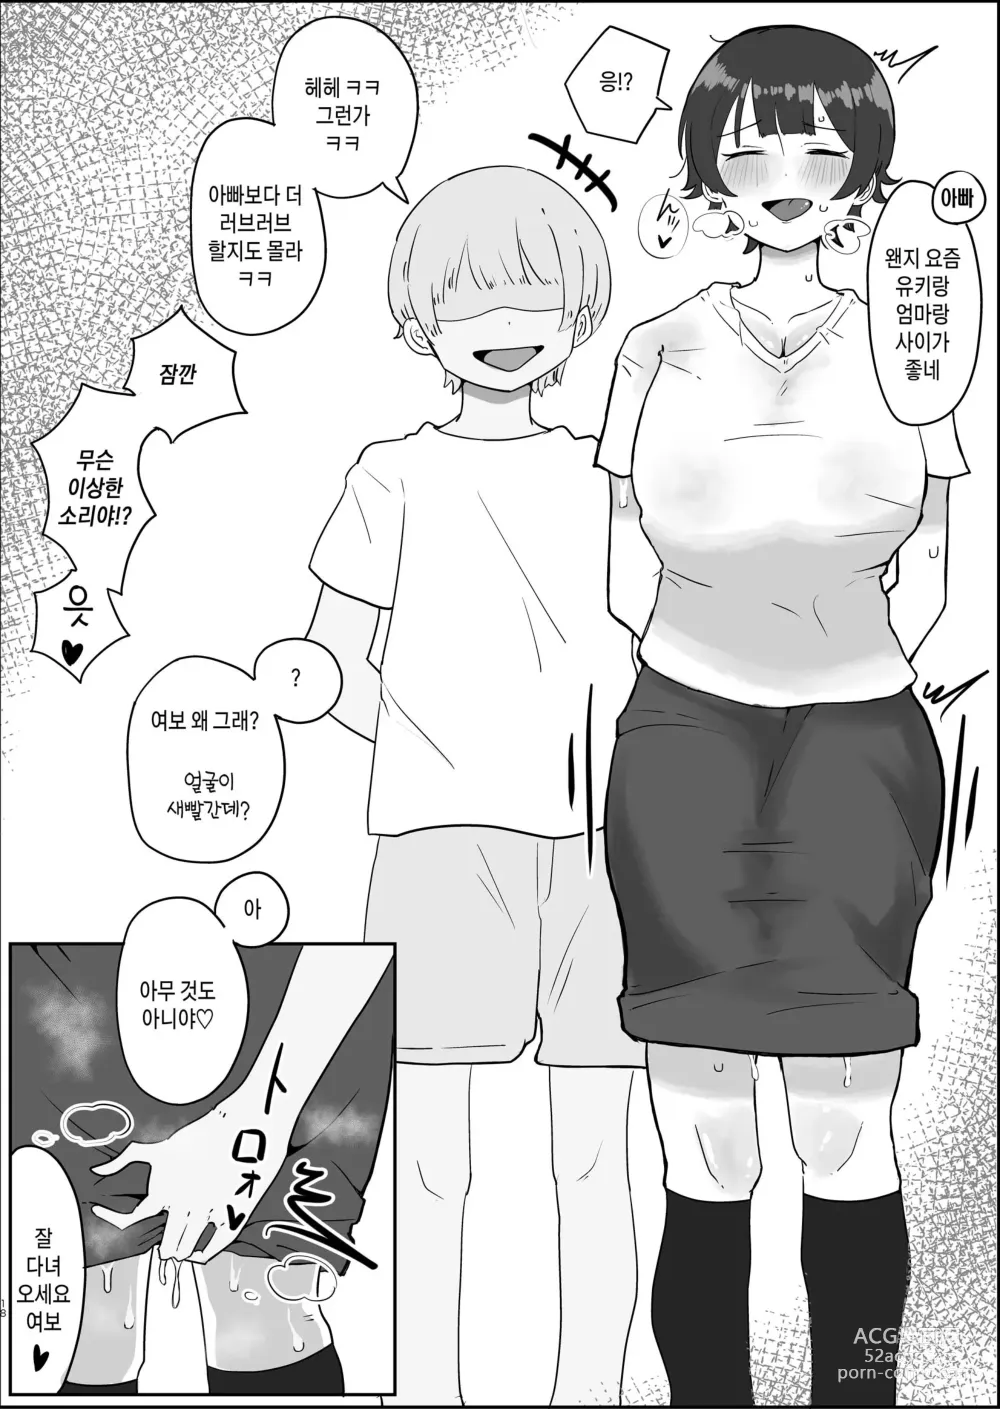 Page 17 of doujinshi 아들의 거근에 유혹되어 매일 땀범벅 섹스해 버리는 엄마의 이야기